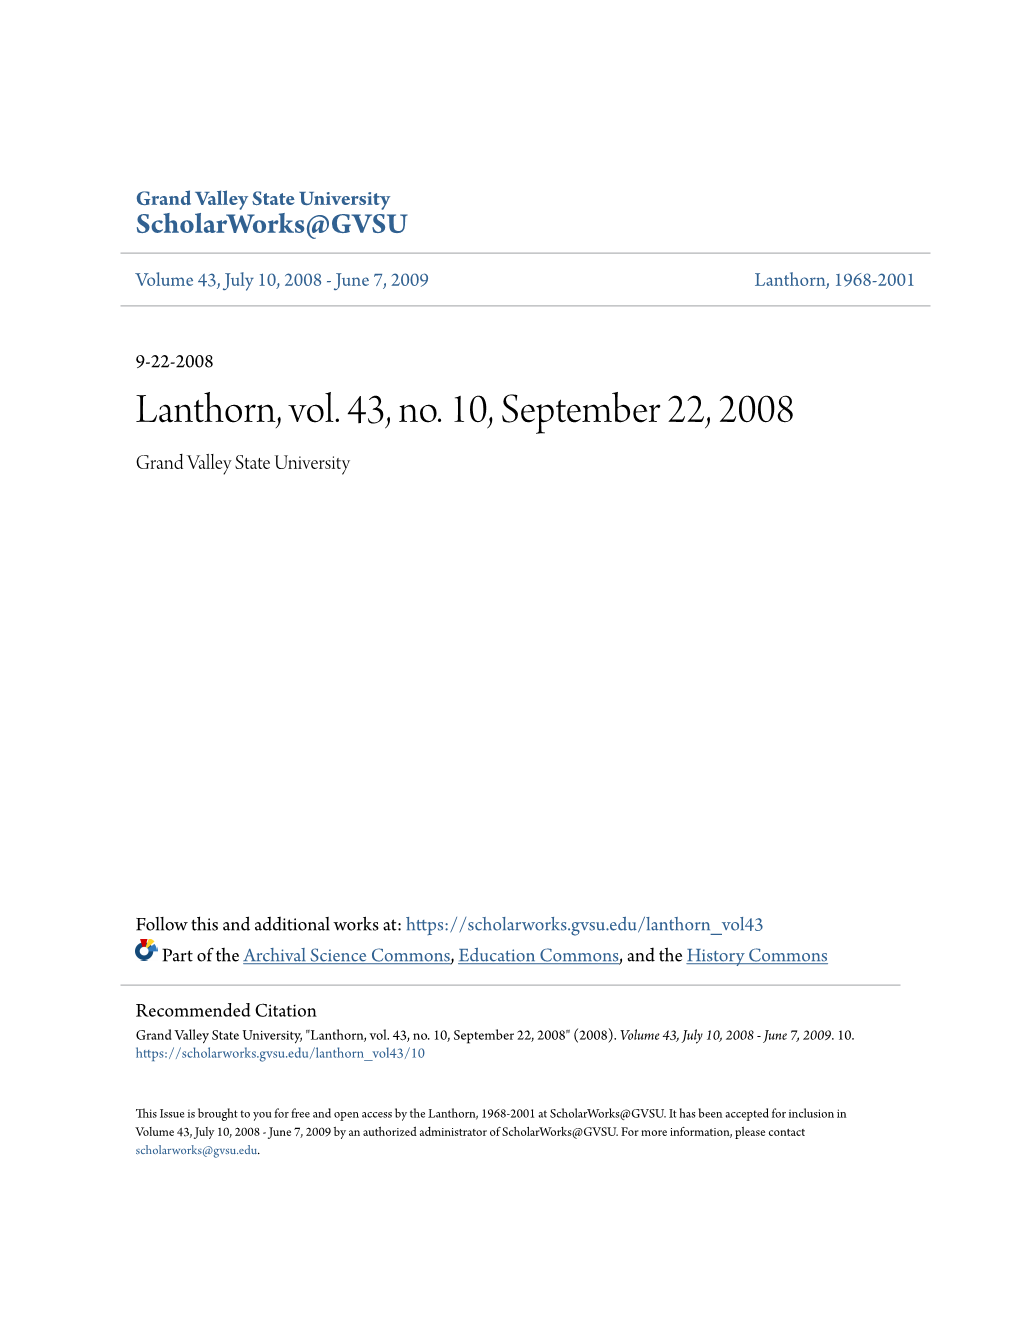 Lanthorn, Vol. 43, No. 10, September 22, 2008 Grand Valley State University